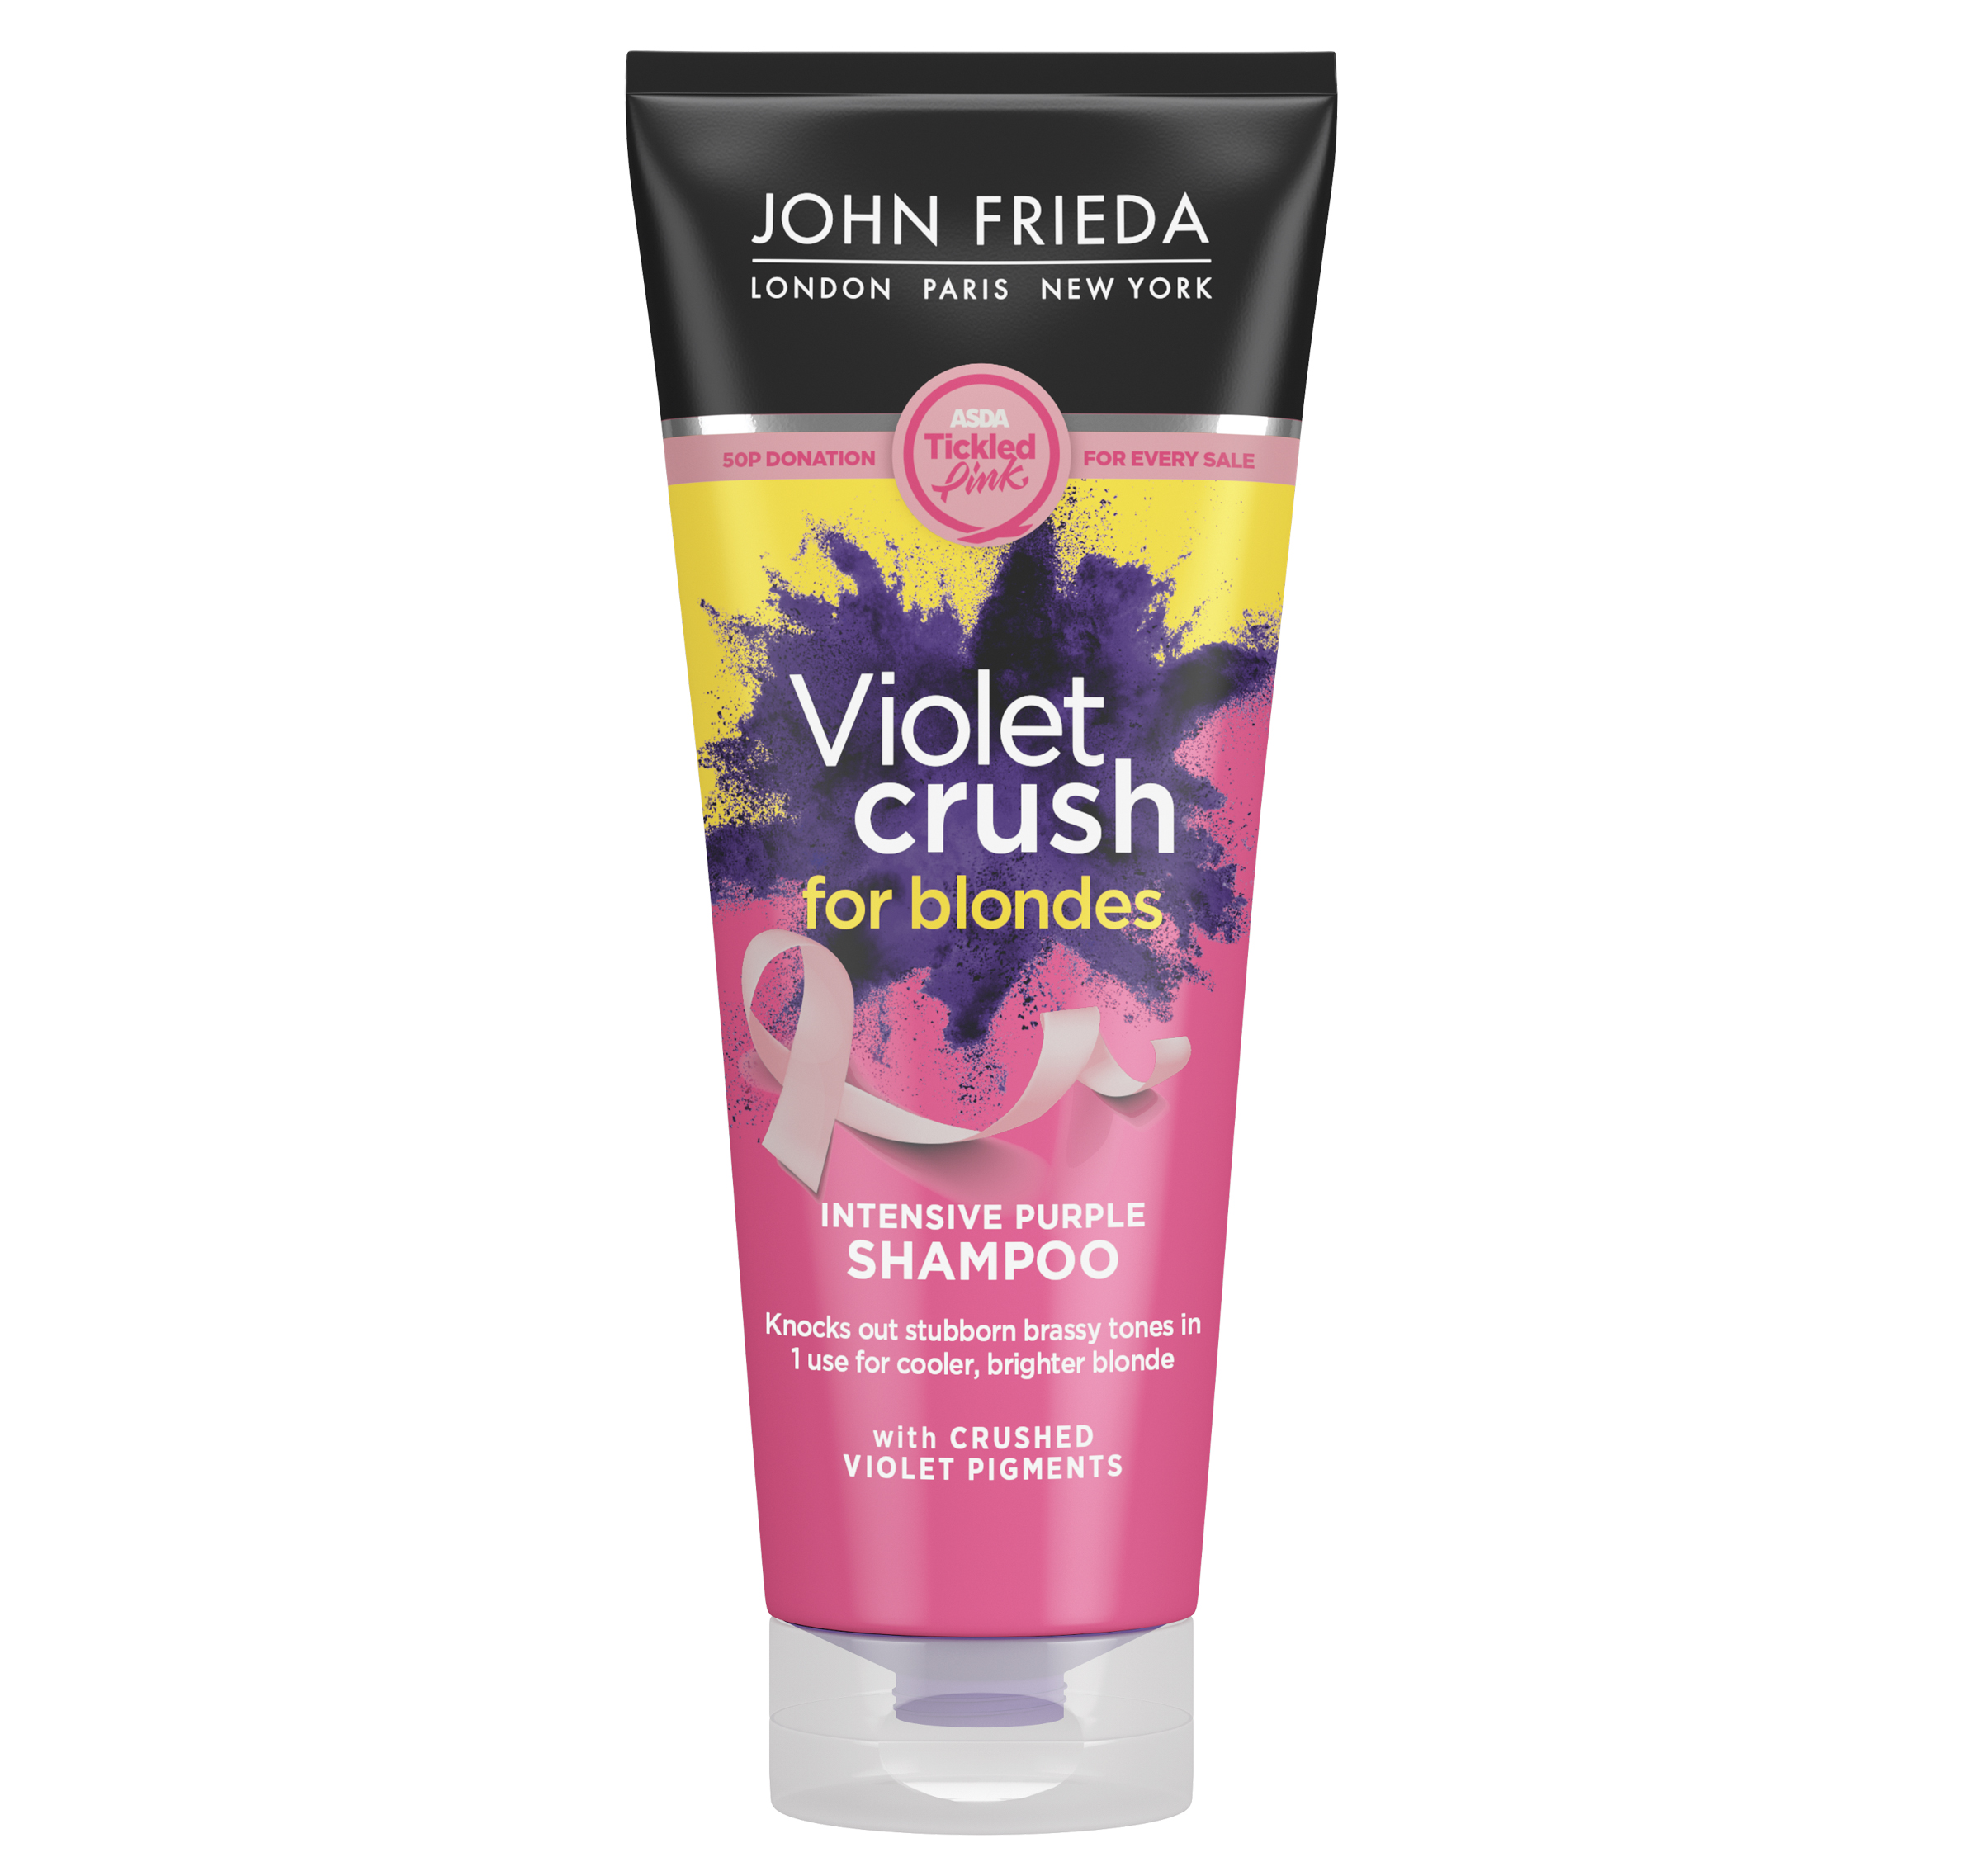 John frieda violet crush for blondes intensive shampoo tickled pink limited edition